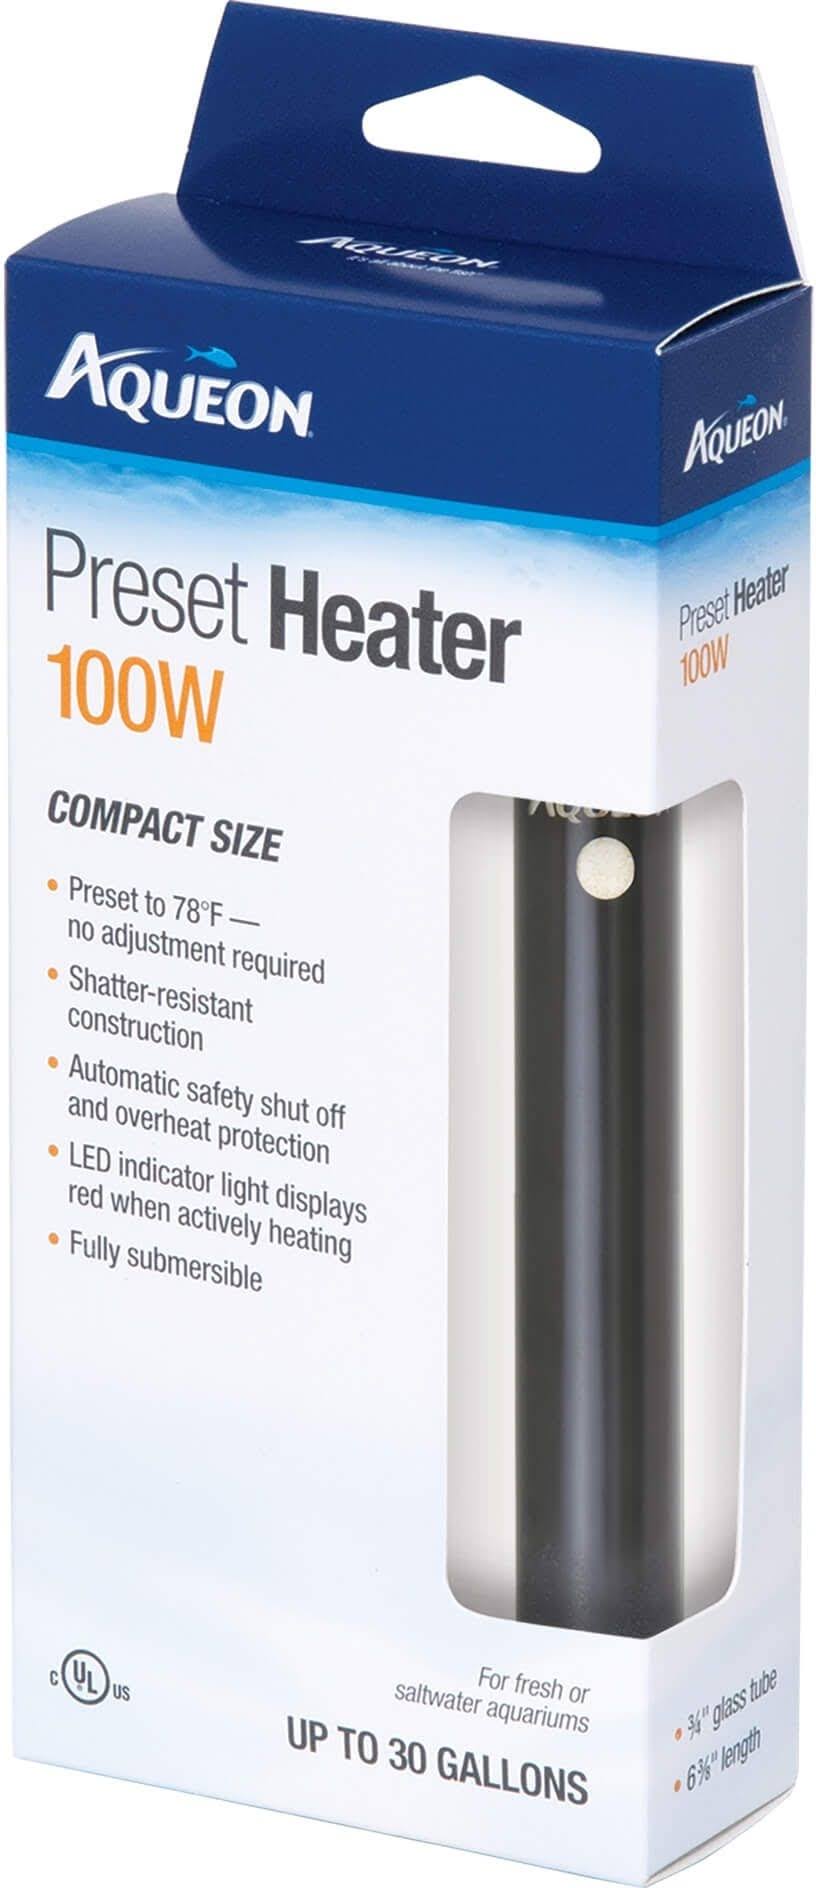 Aqueon Preset Heater - 100W